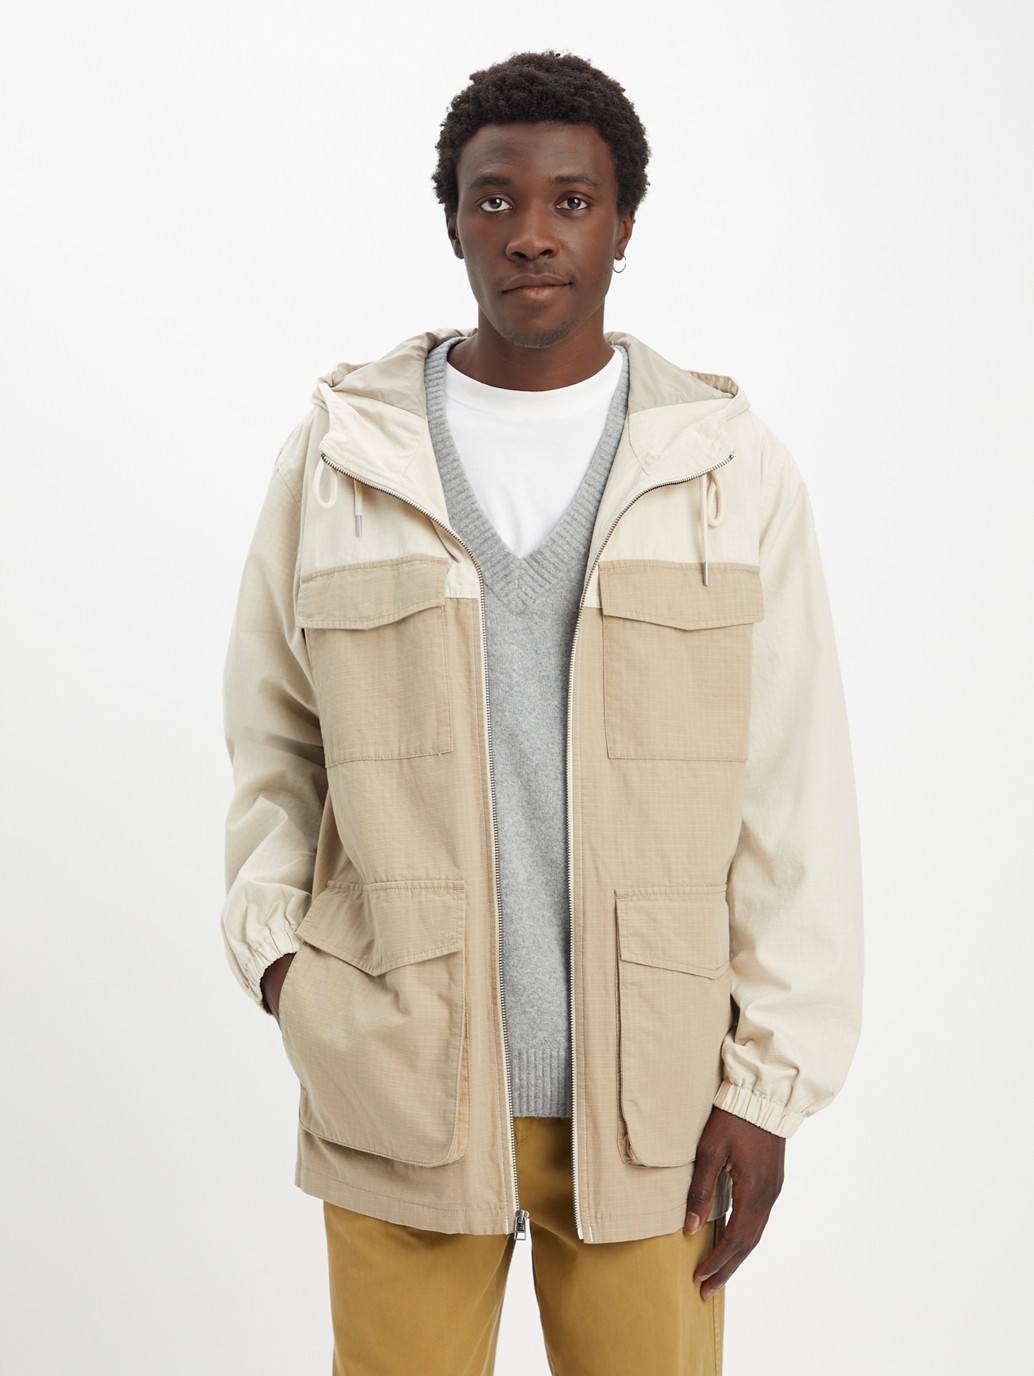 Uniqlo Utility Parka Hooded Light Jacket Brown  Tan Mens Size XS  eBay